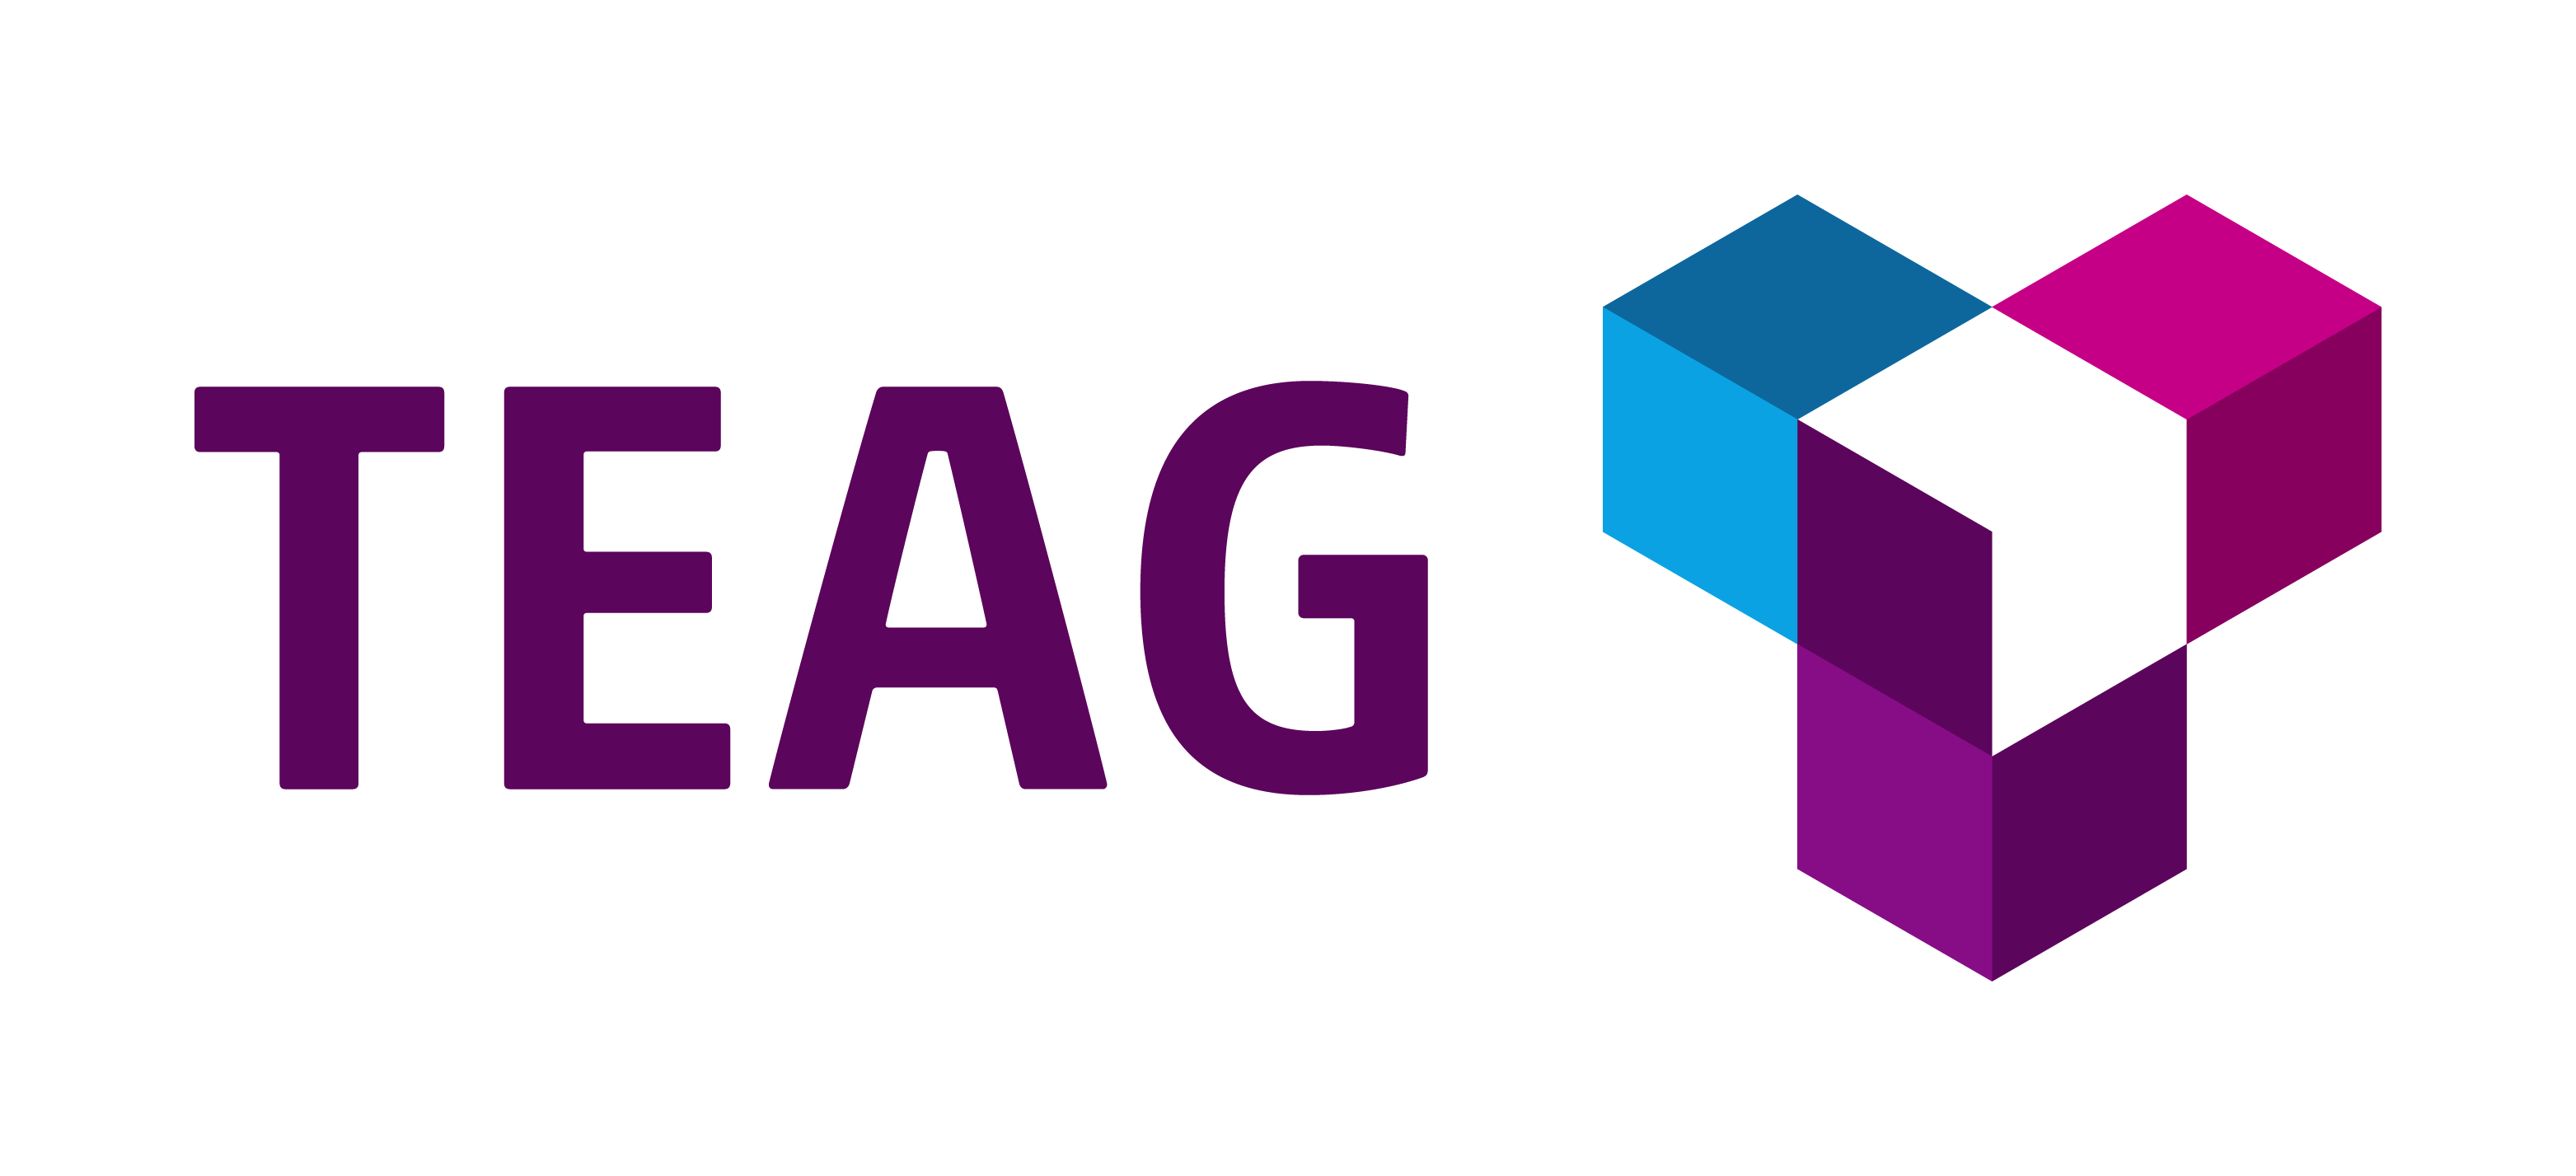 teag logo rgb